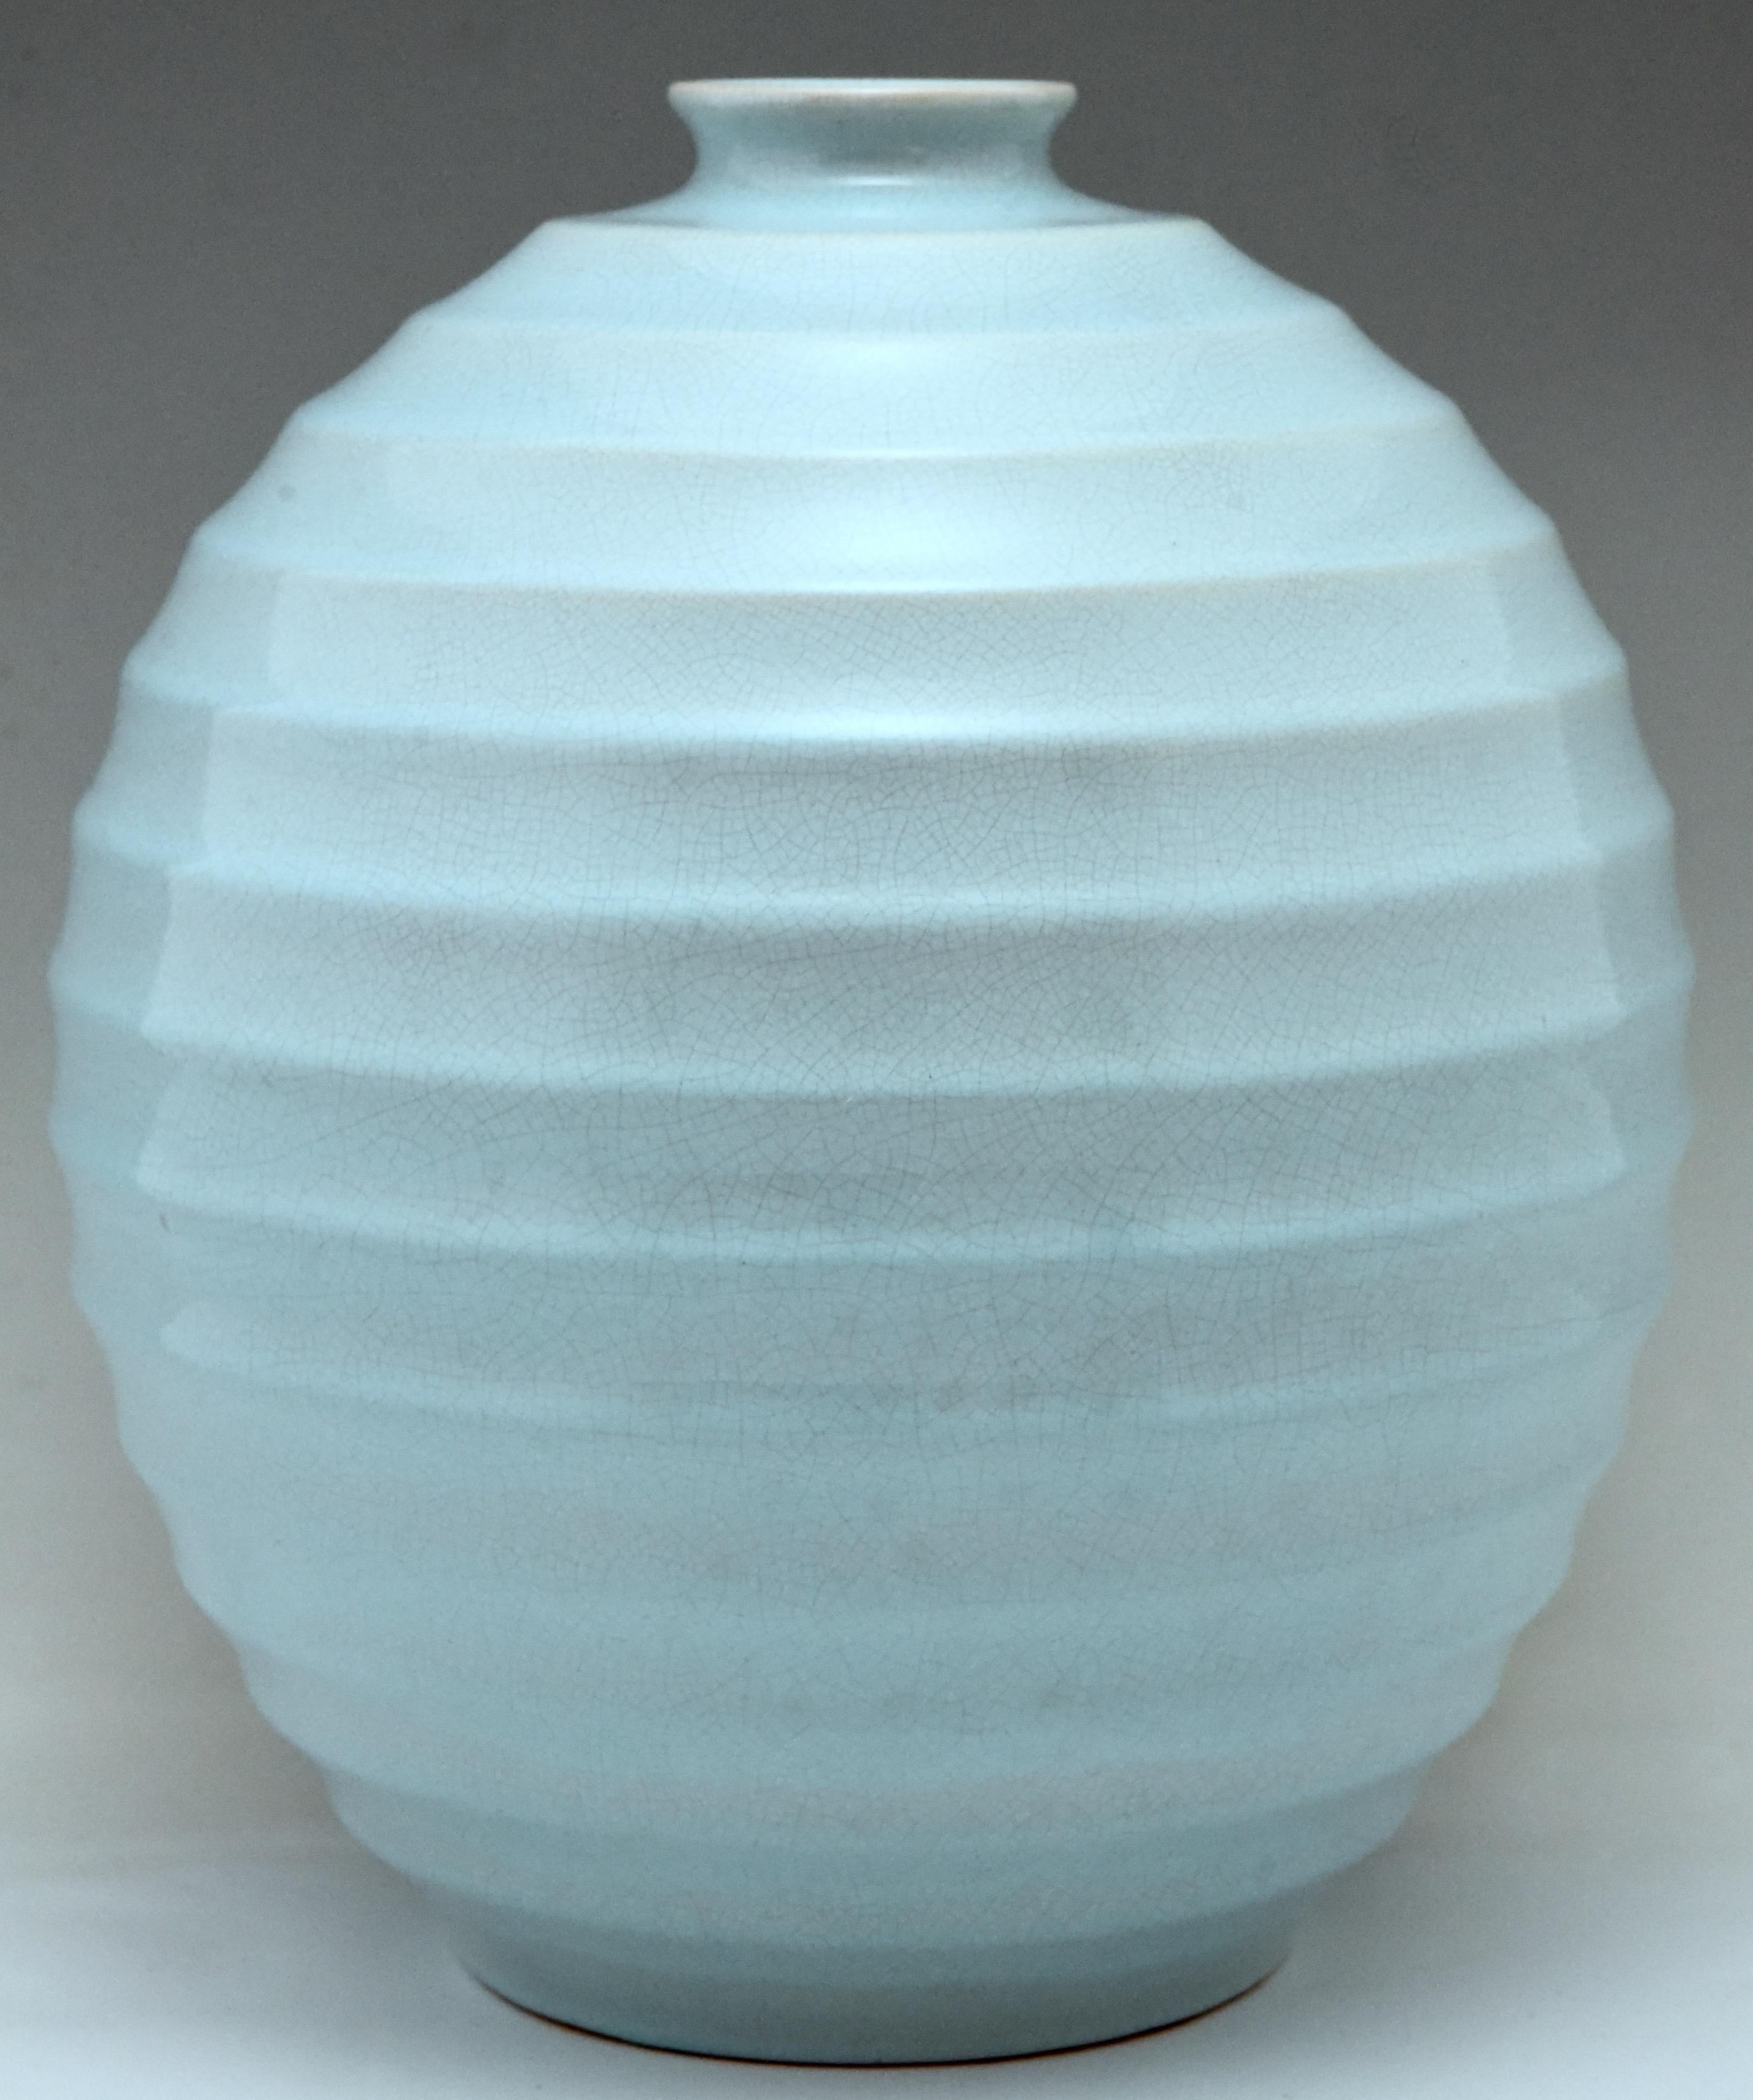 Impressive Art Deco ceramic vase, glazed light blue ribbed spherical form, H. 14 inch.
By Villeroy & Boch, Luxembourg, circa 1930-1940.